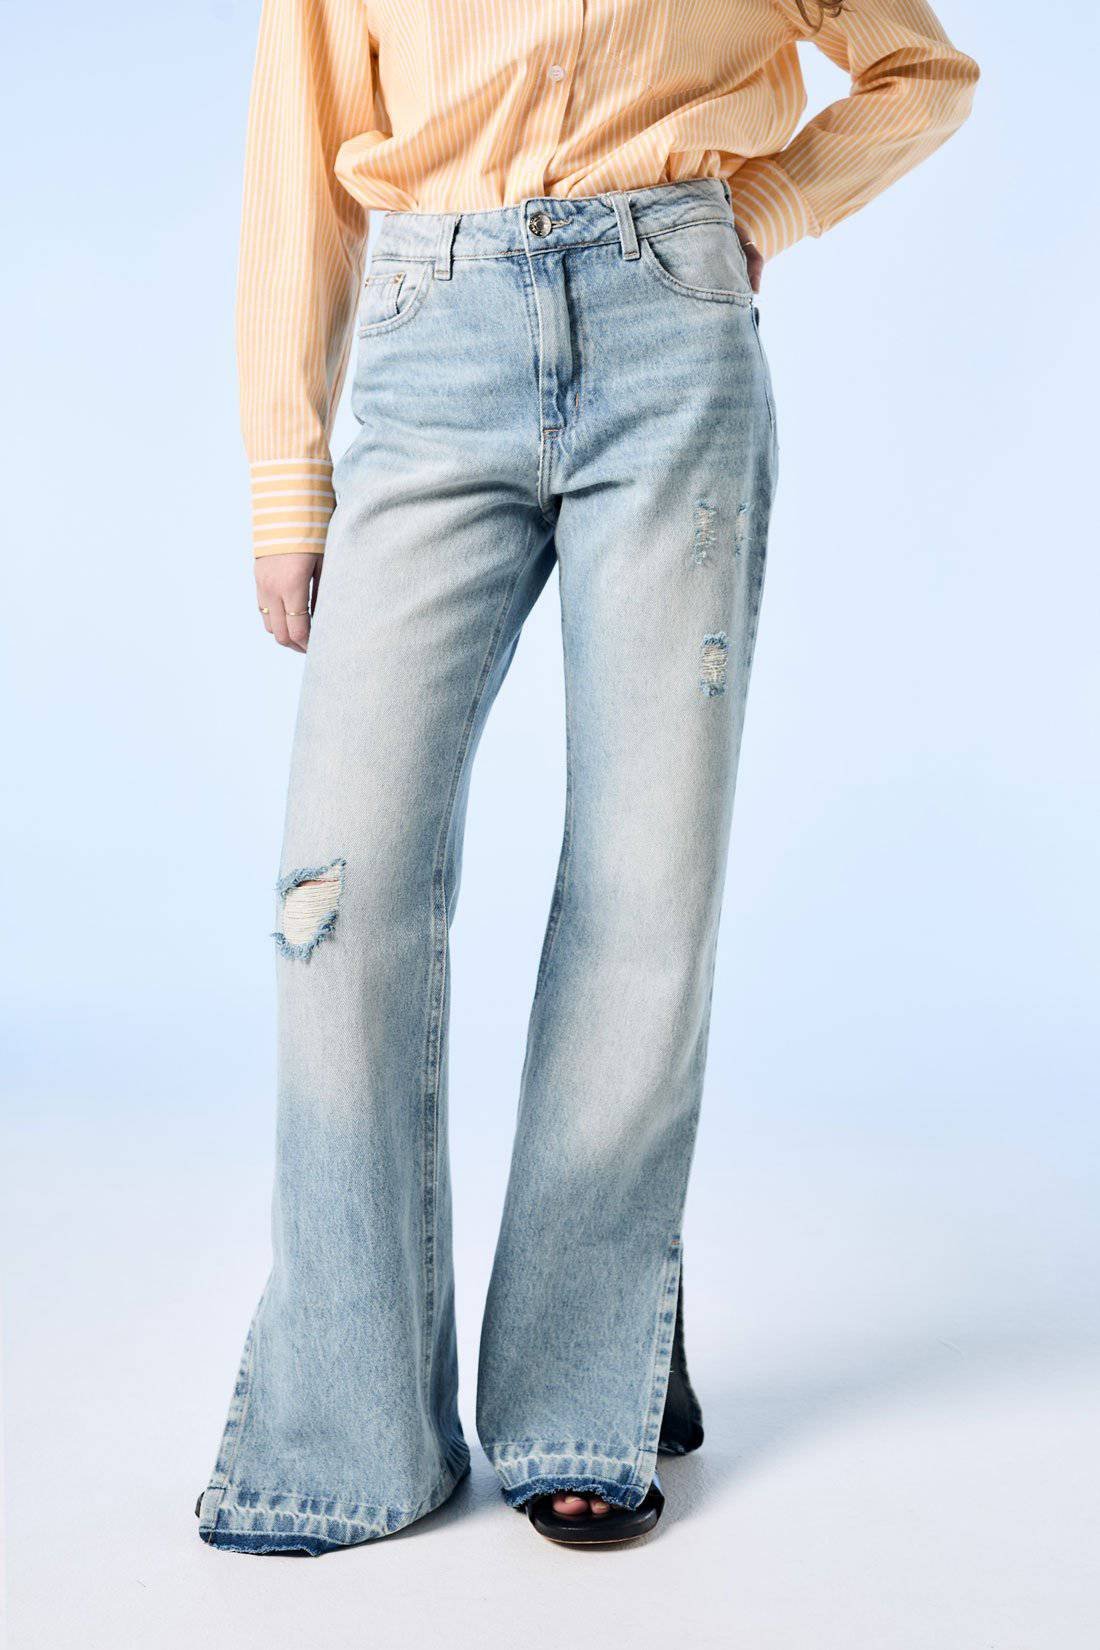 Pantalón jean de mujer ropa de moda verano 25